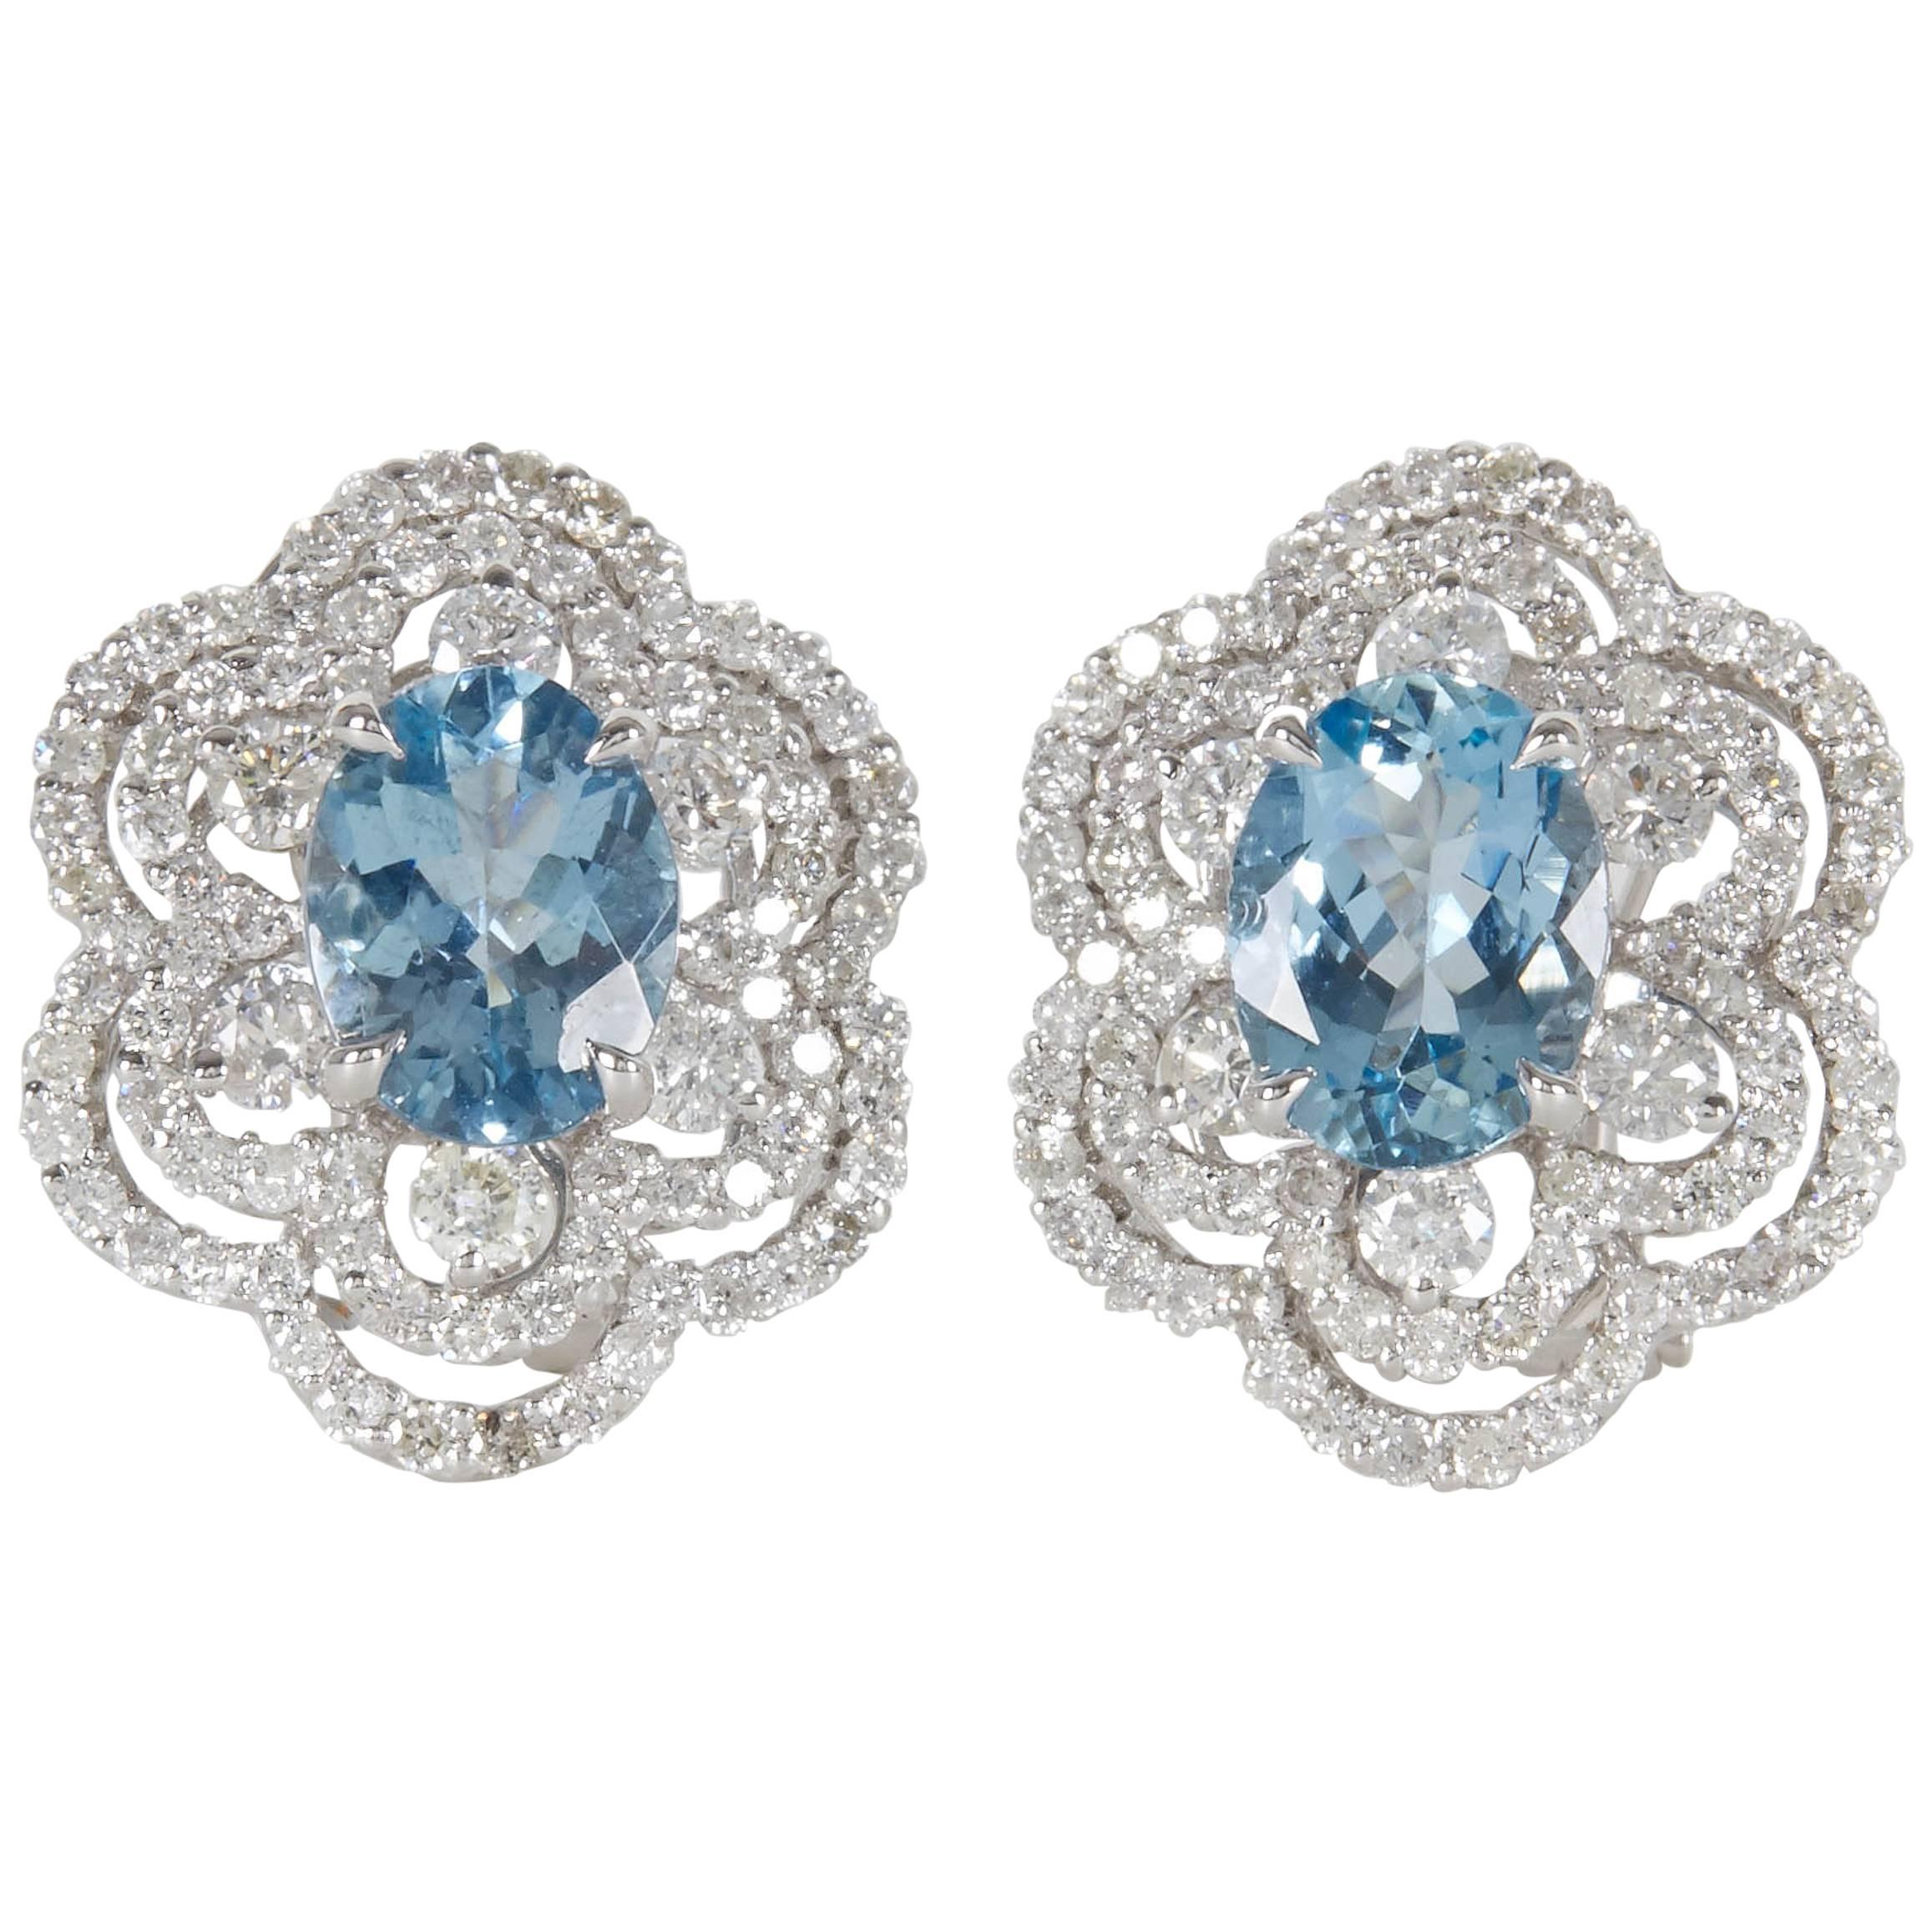 Stunning Aquamarine Diamond Gold Earrings